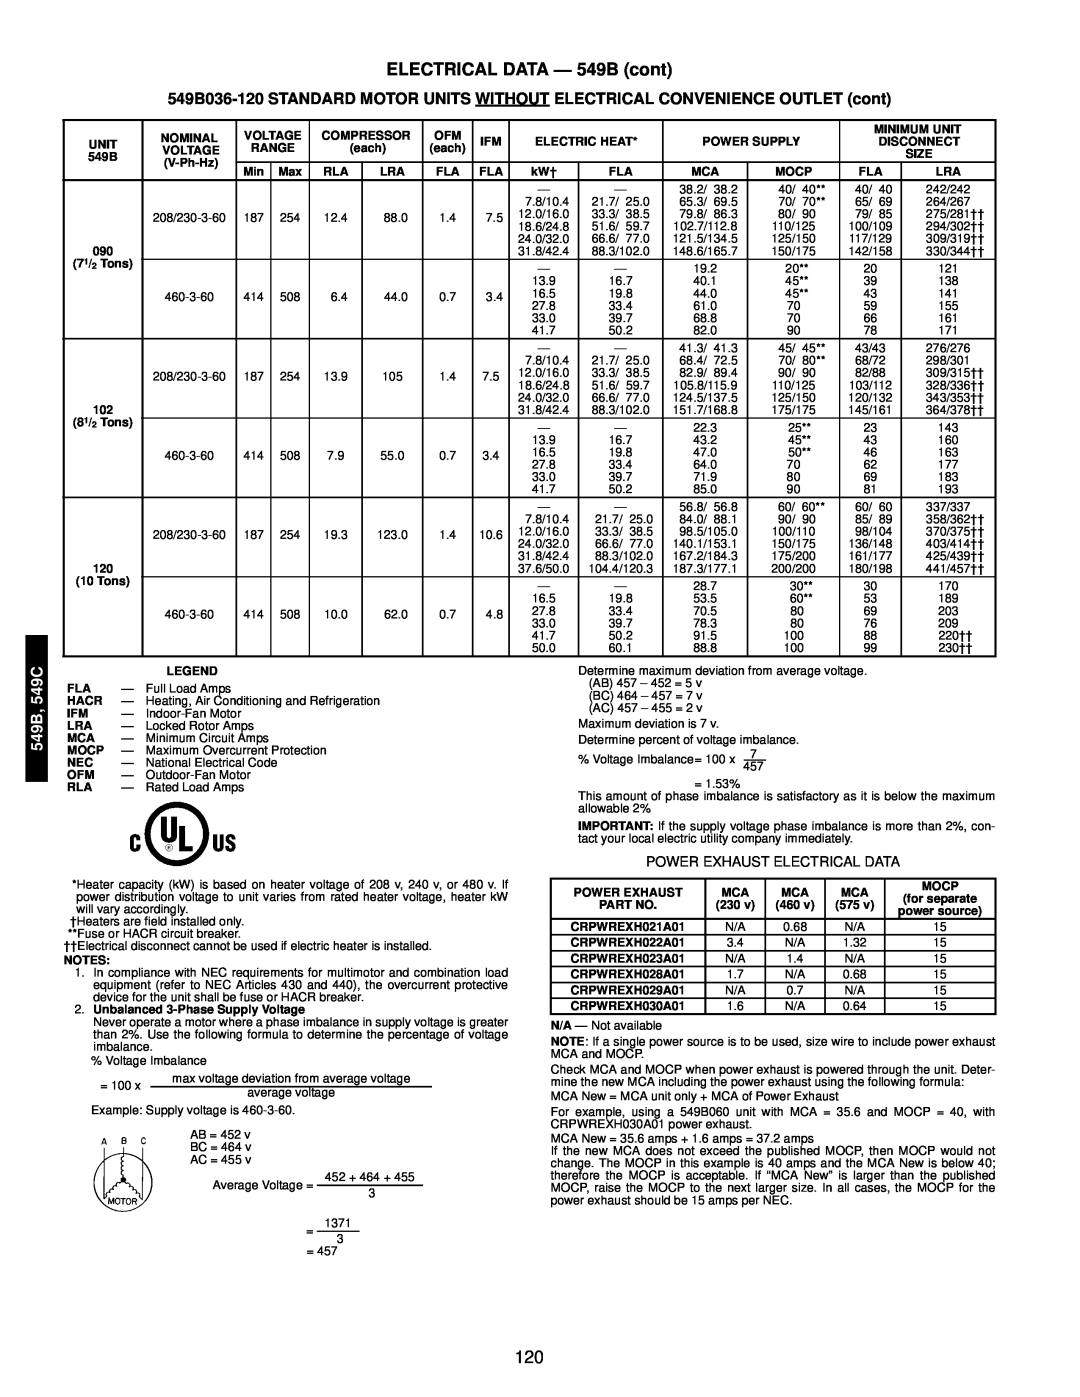 Bryant manual ELECTRICAL DATA — 549B cont, 549B, 549C 